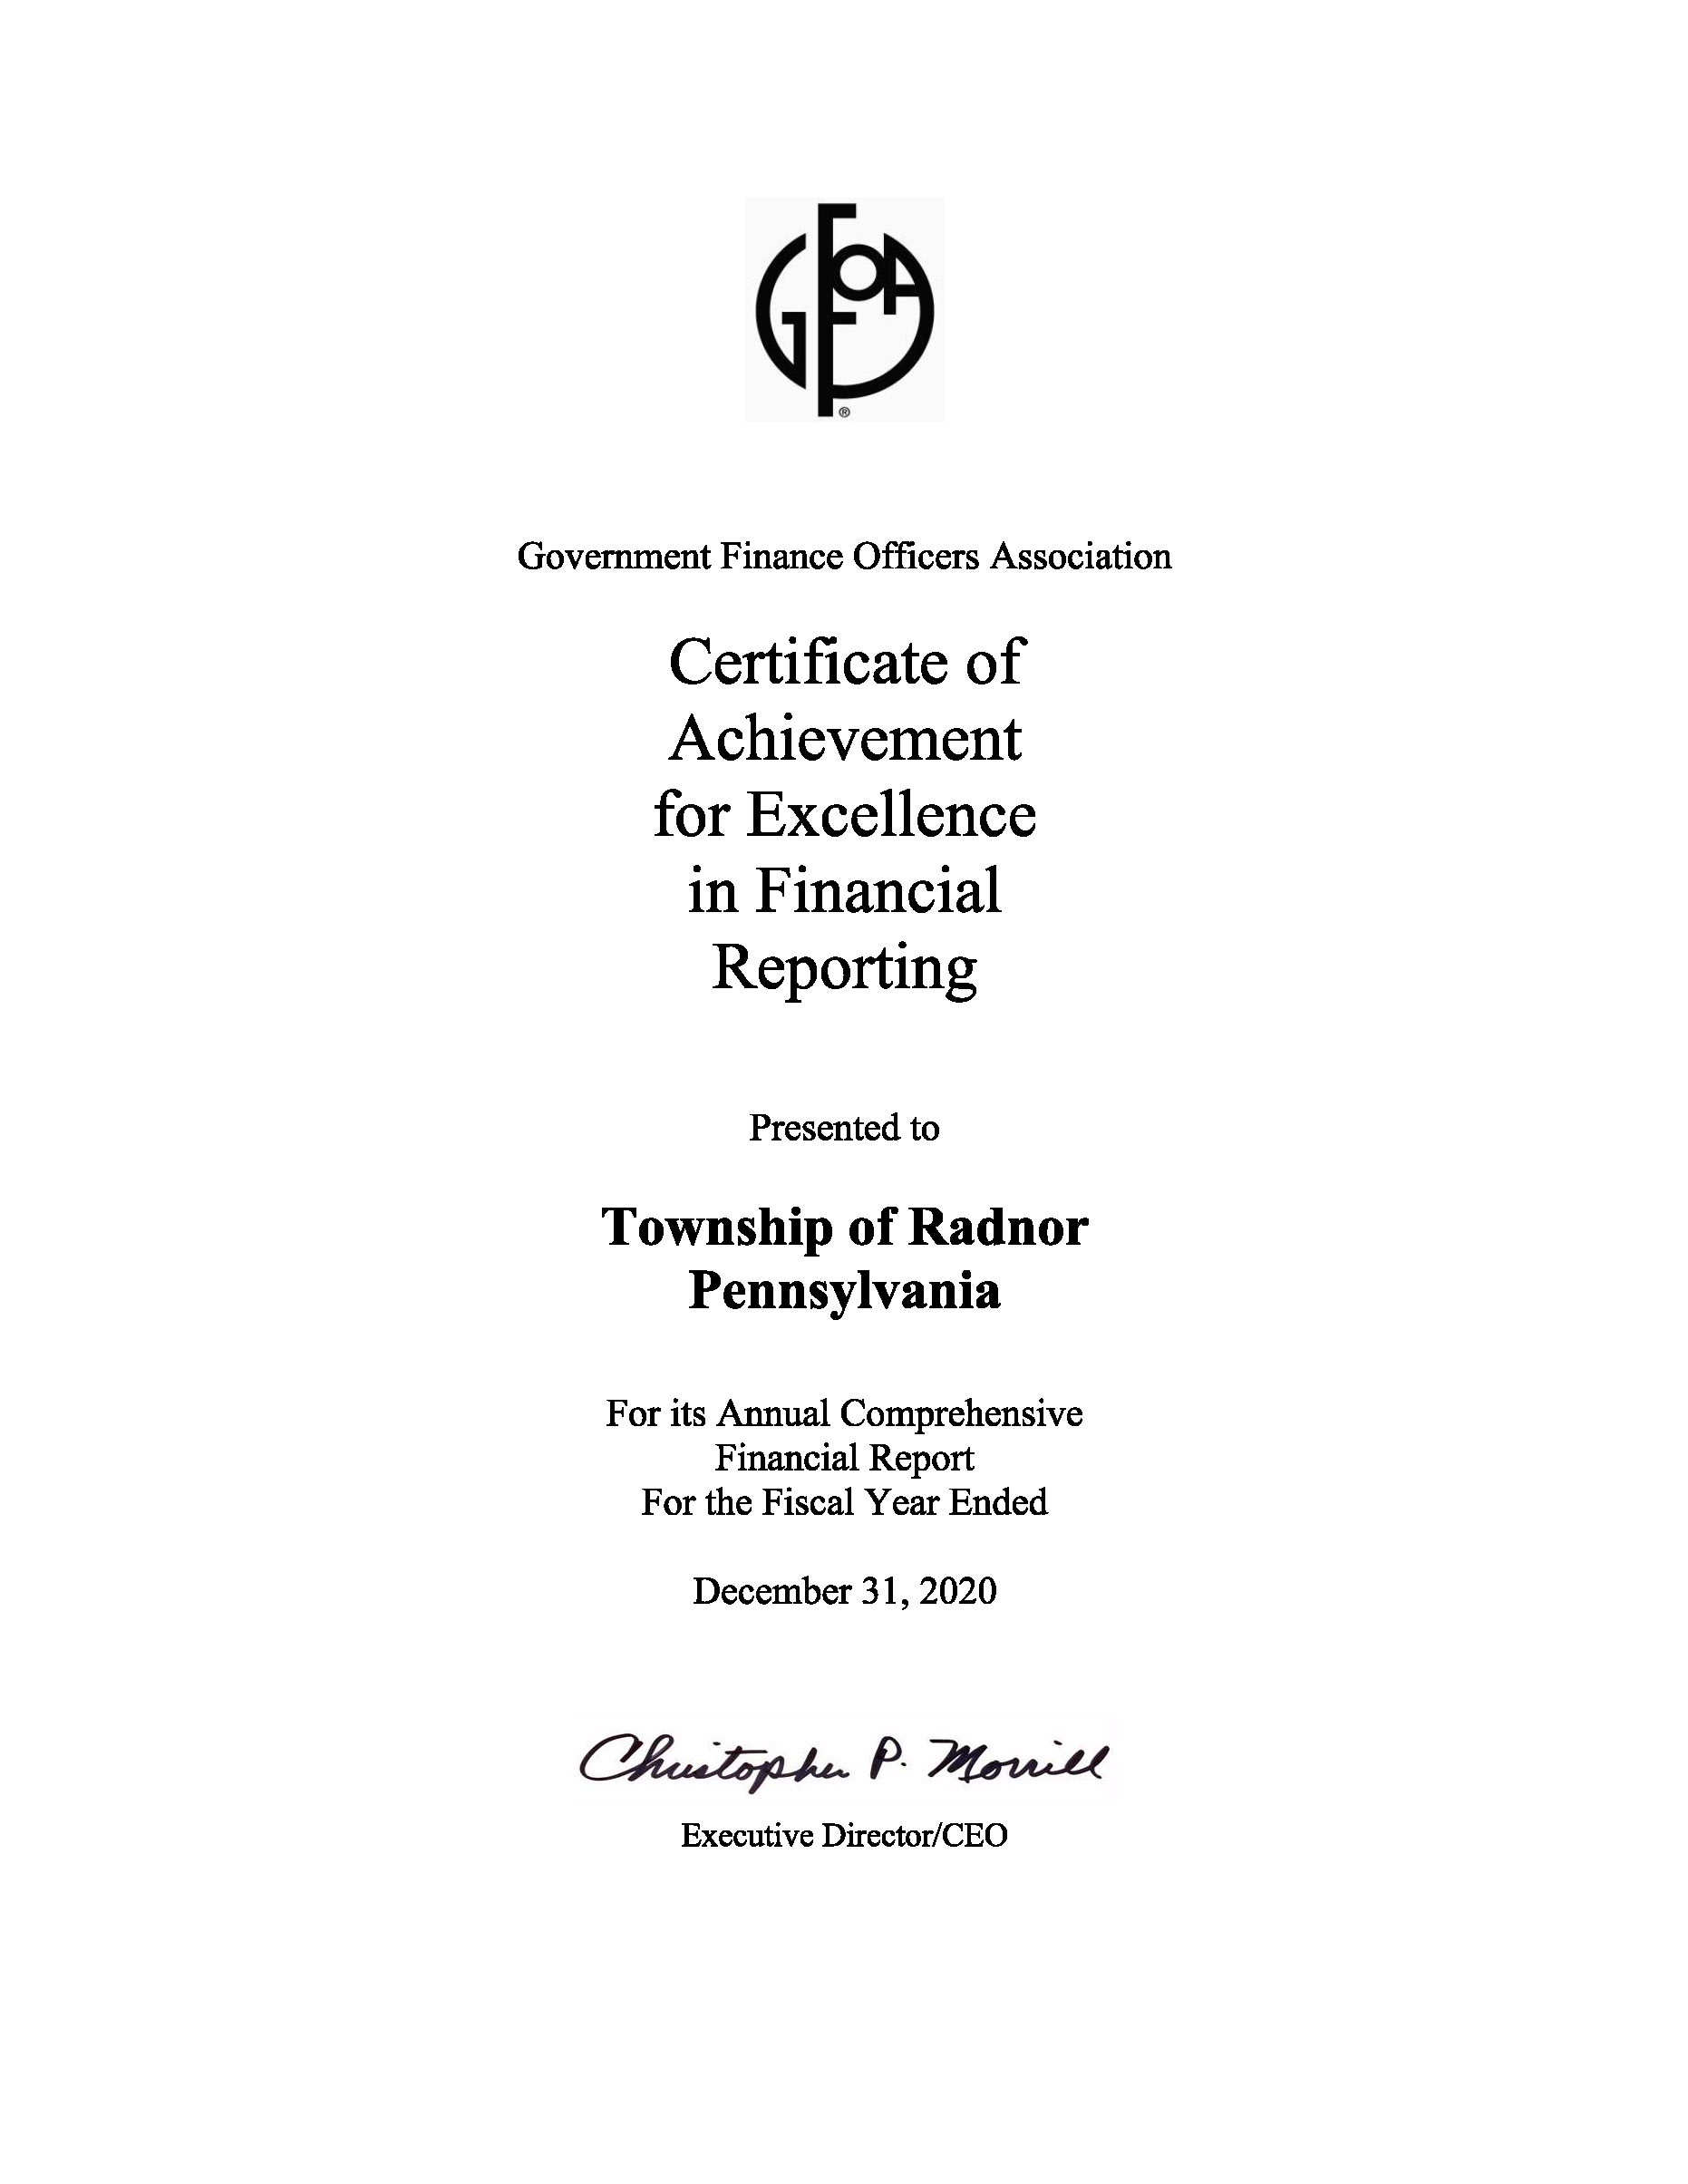 2019 GFOA Certificate of Achievement